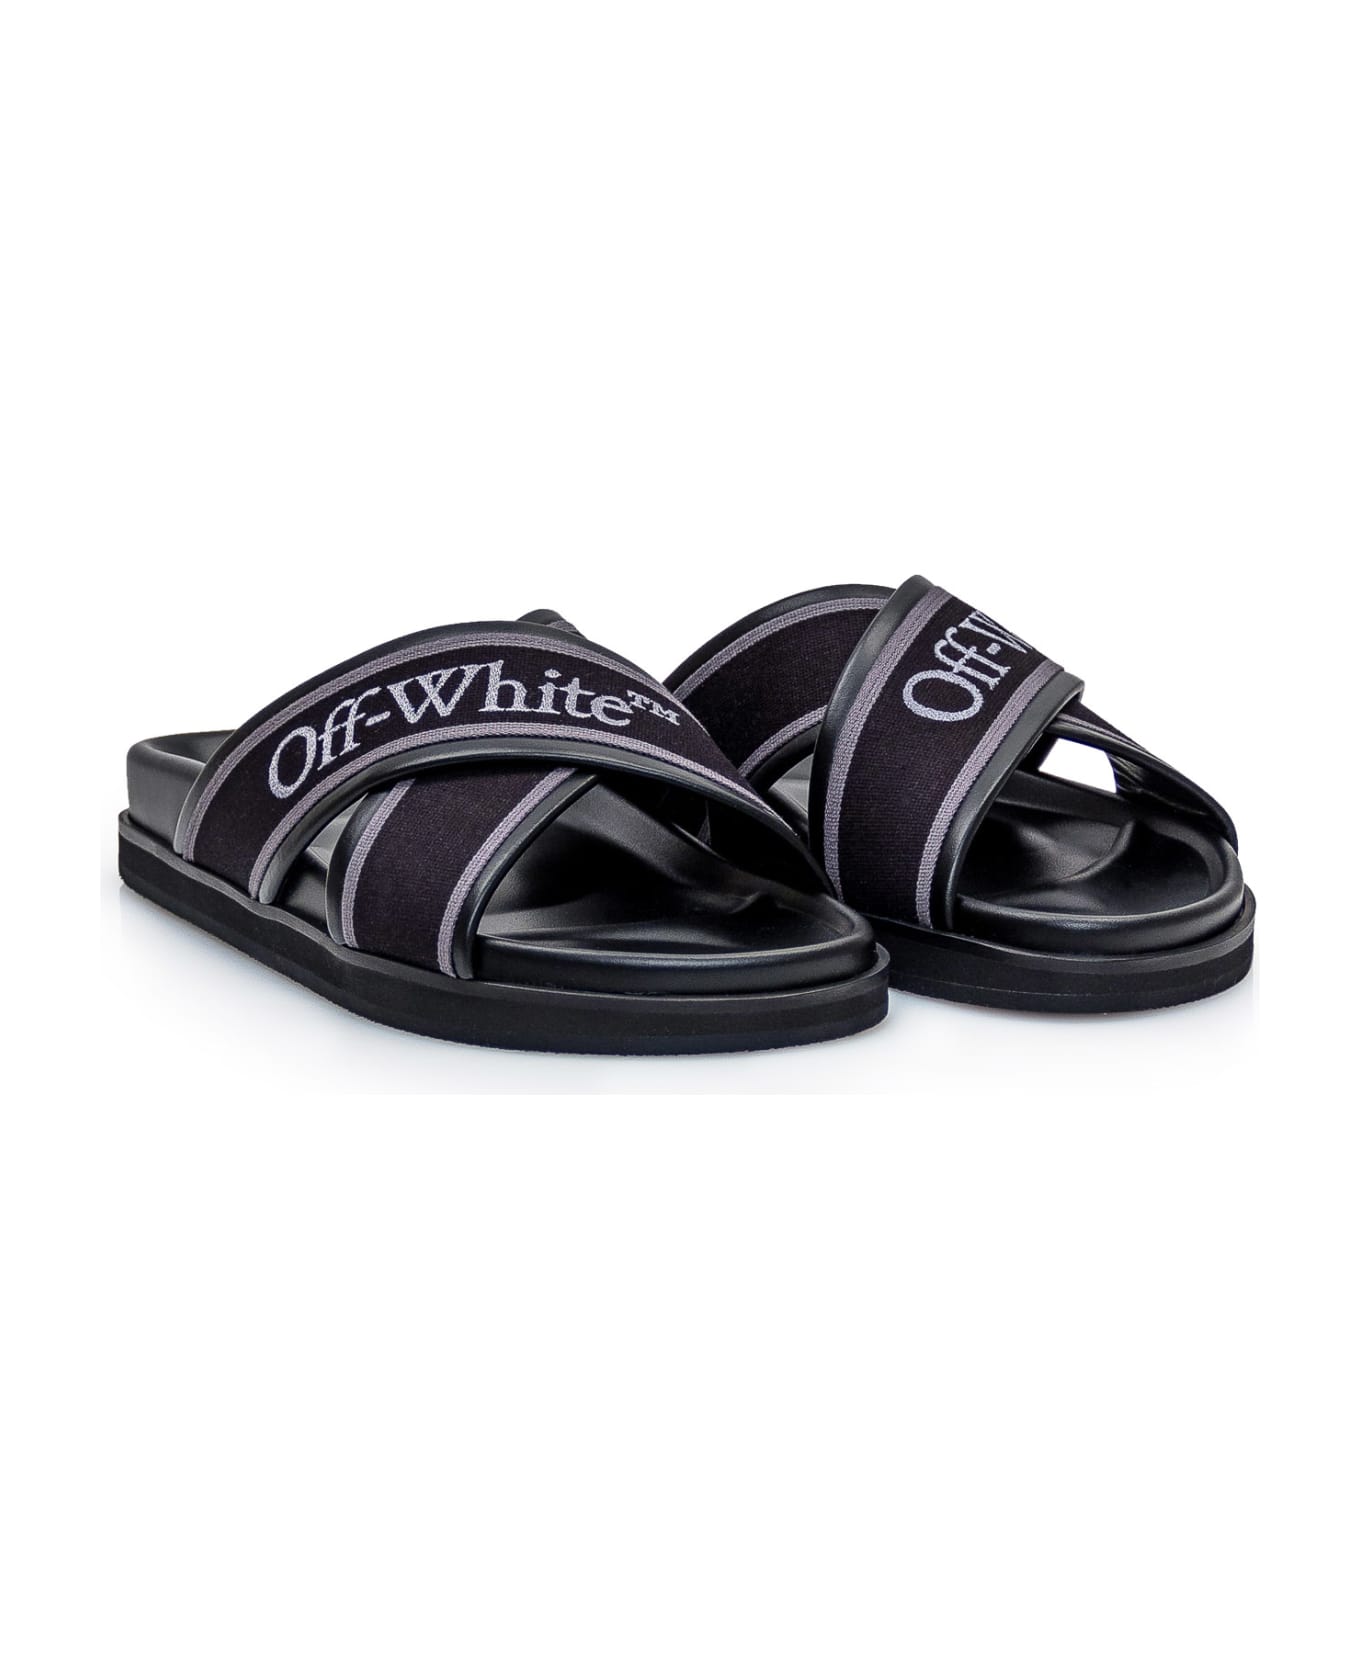 Off-White Sandals - Black Black その他各種シューズ